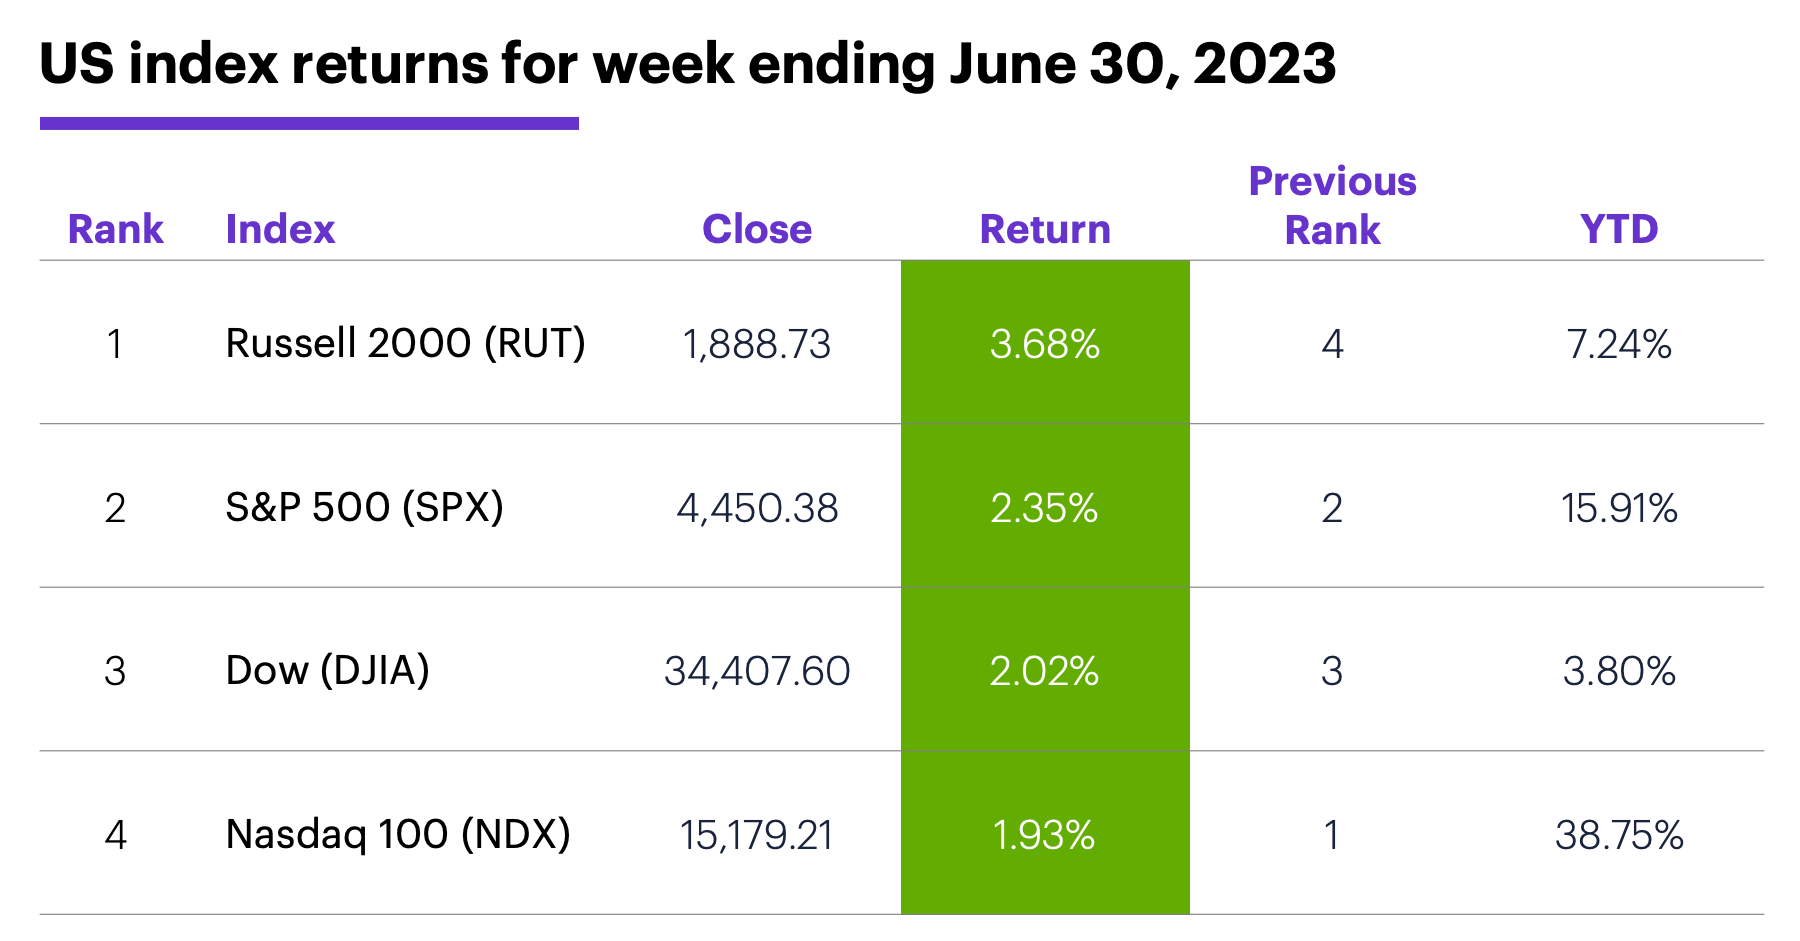 US stock index performance for week ending 6/30/23. S&P 500 (SPX), Nasdaq 100 (NDX), Russell 2000 (RUT), Dow Jones Industrial Average (DJIA).